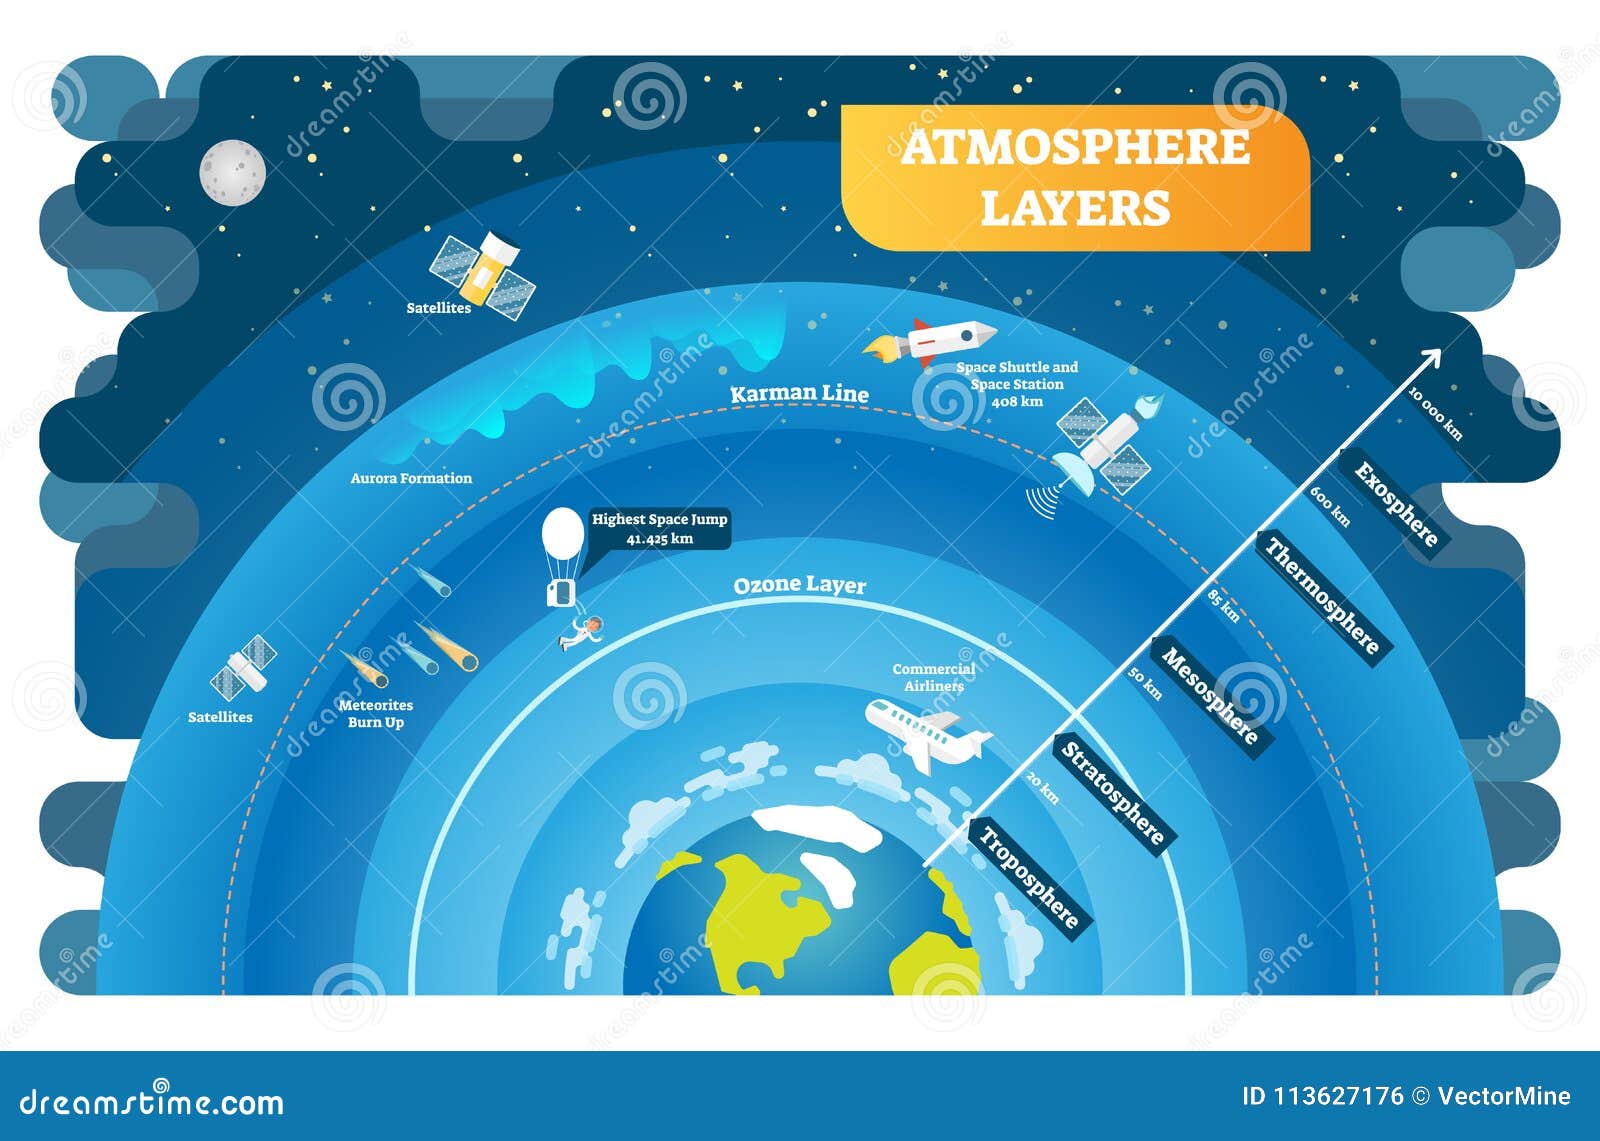 atmosphere layers educational   diagram